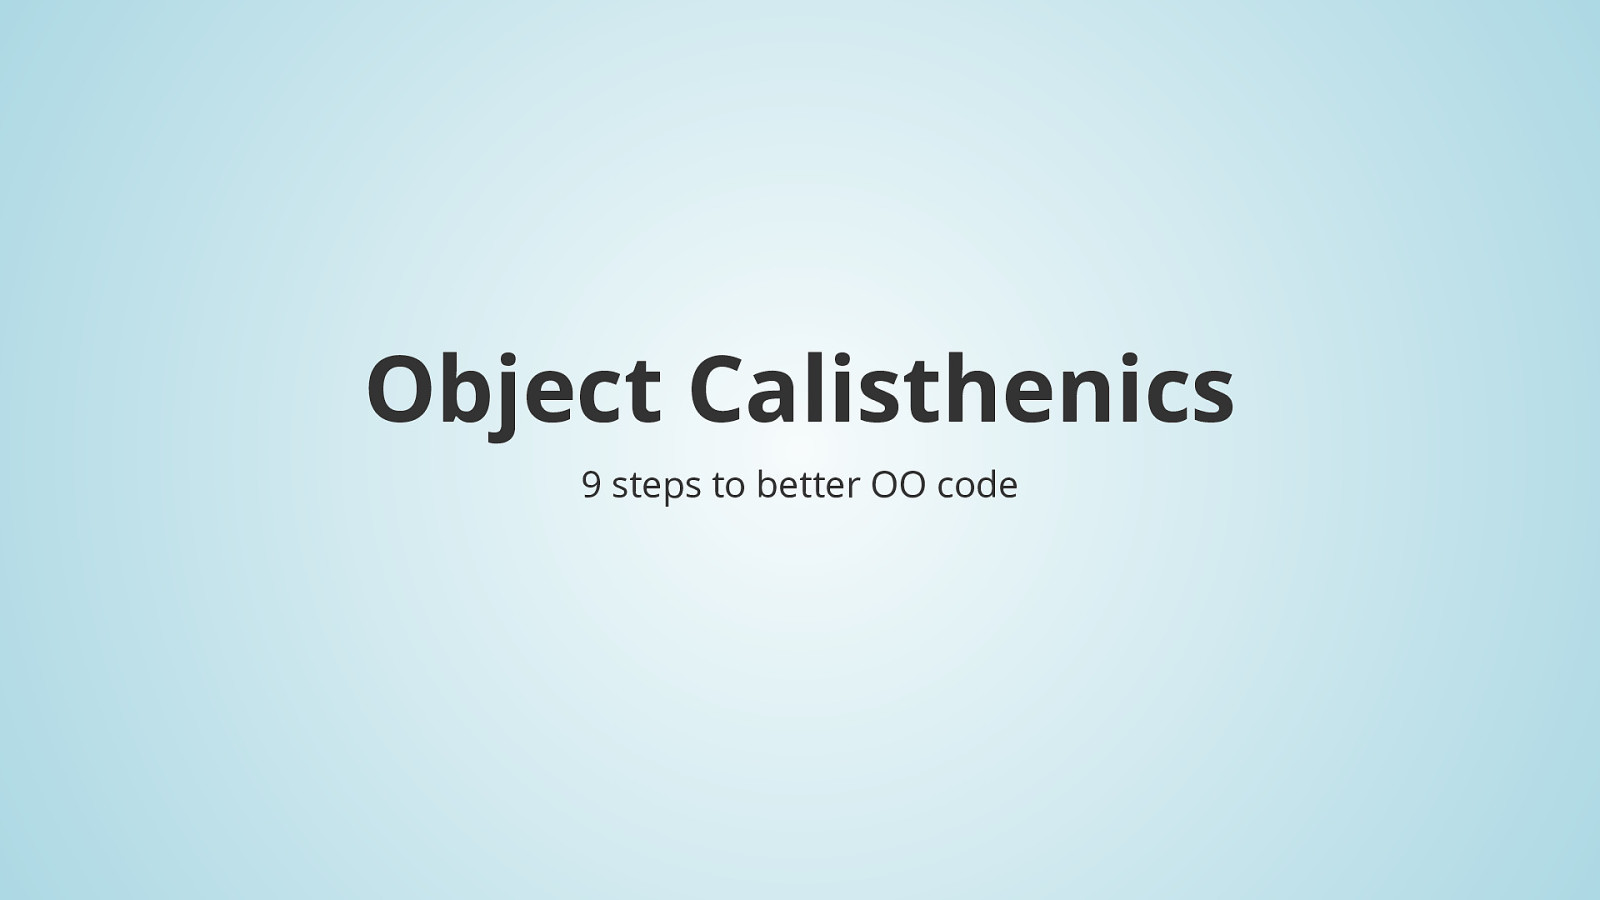 Object Calisthenics - 9 steps to better OO code